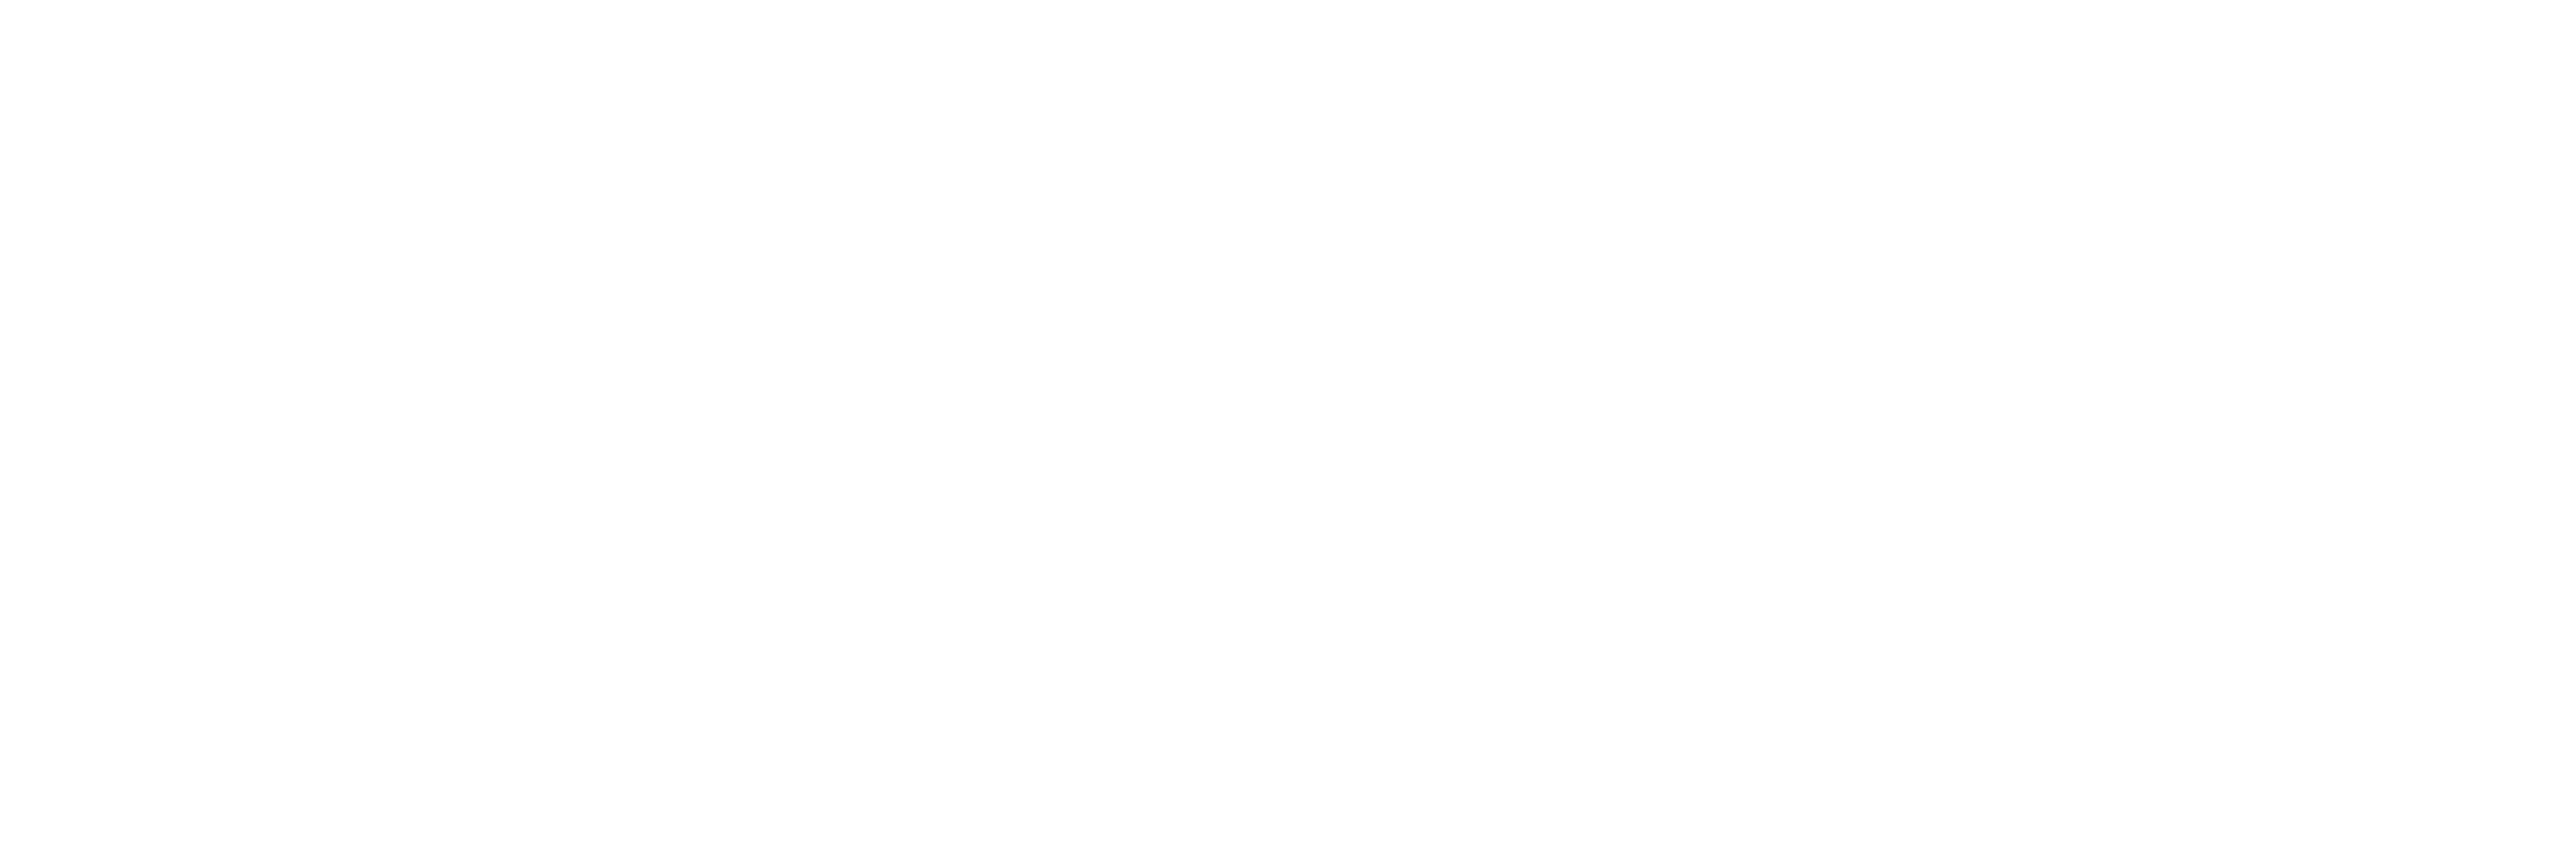 Styla Logo